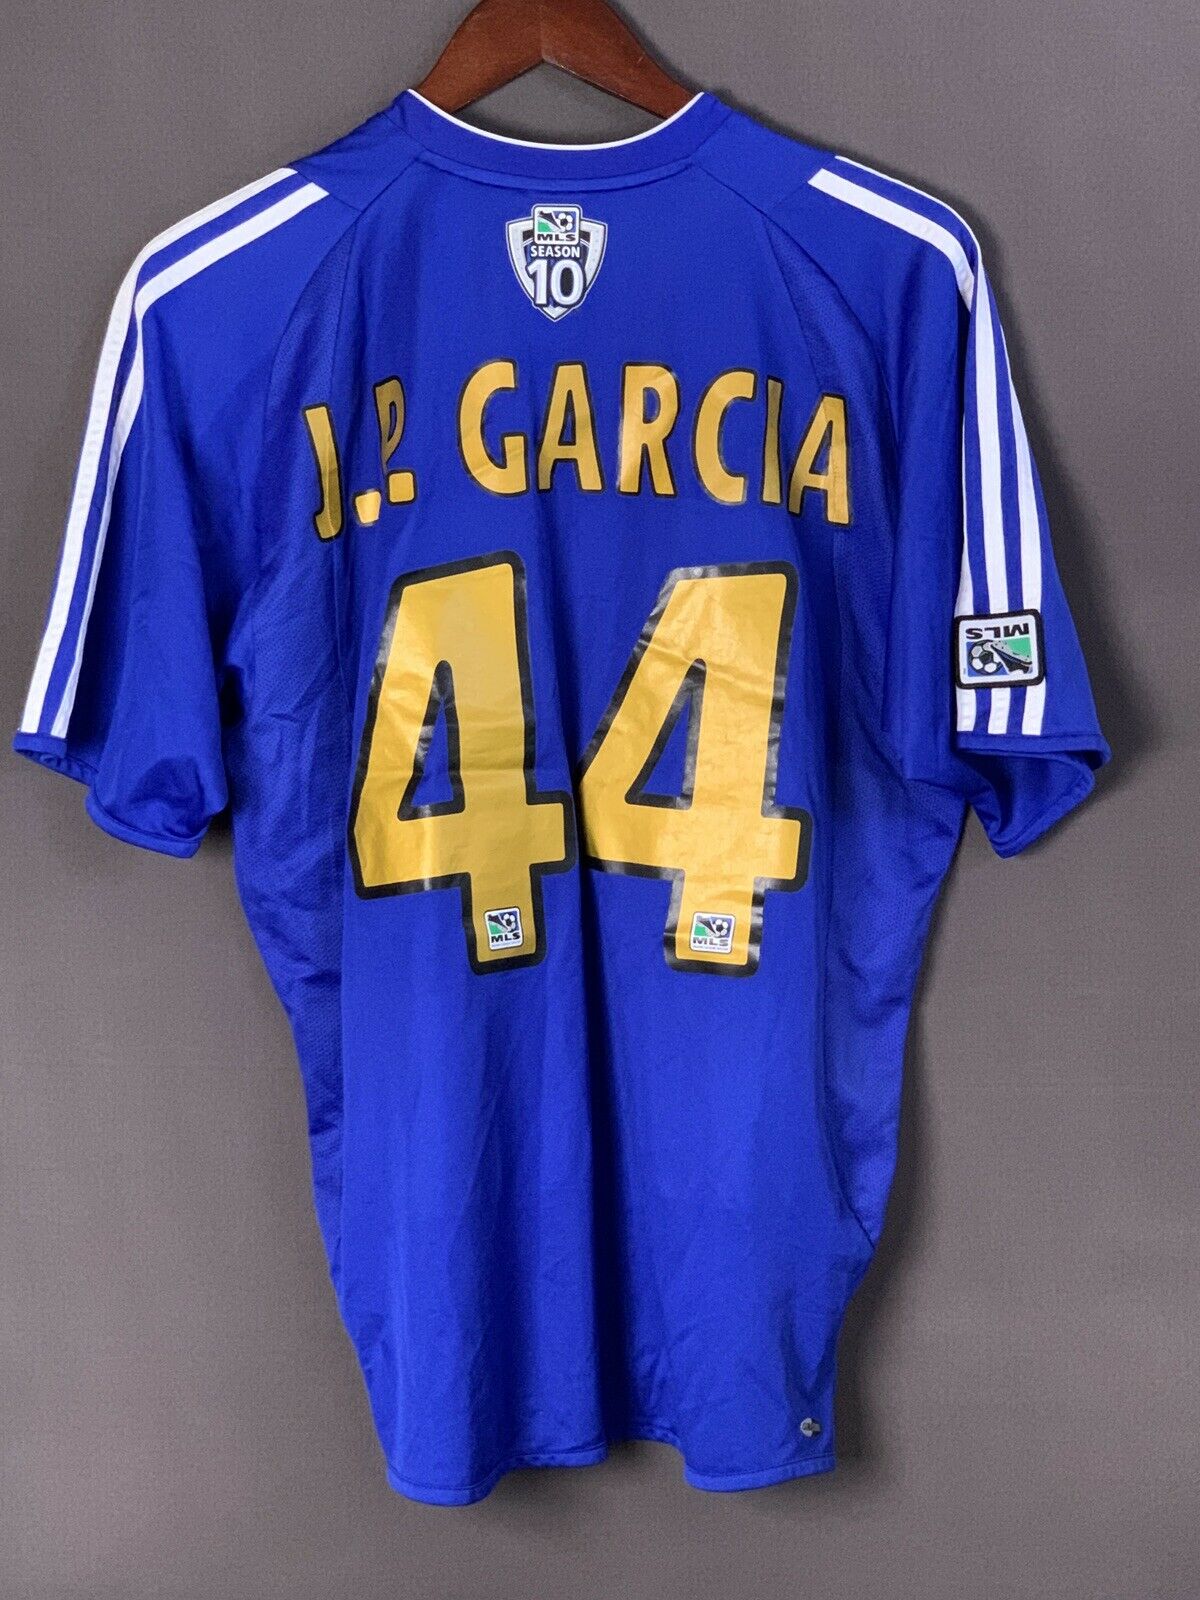 Cd Chivas Usa 2005 Juan Pablo Garcia Game-used/worn Mls Adidas Soccer Jersey Loa